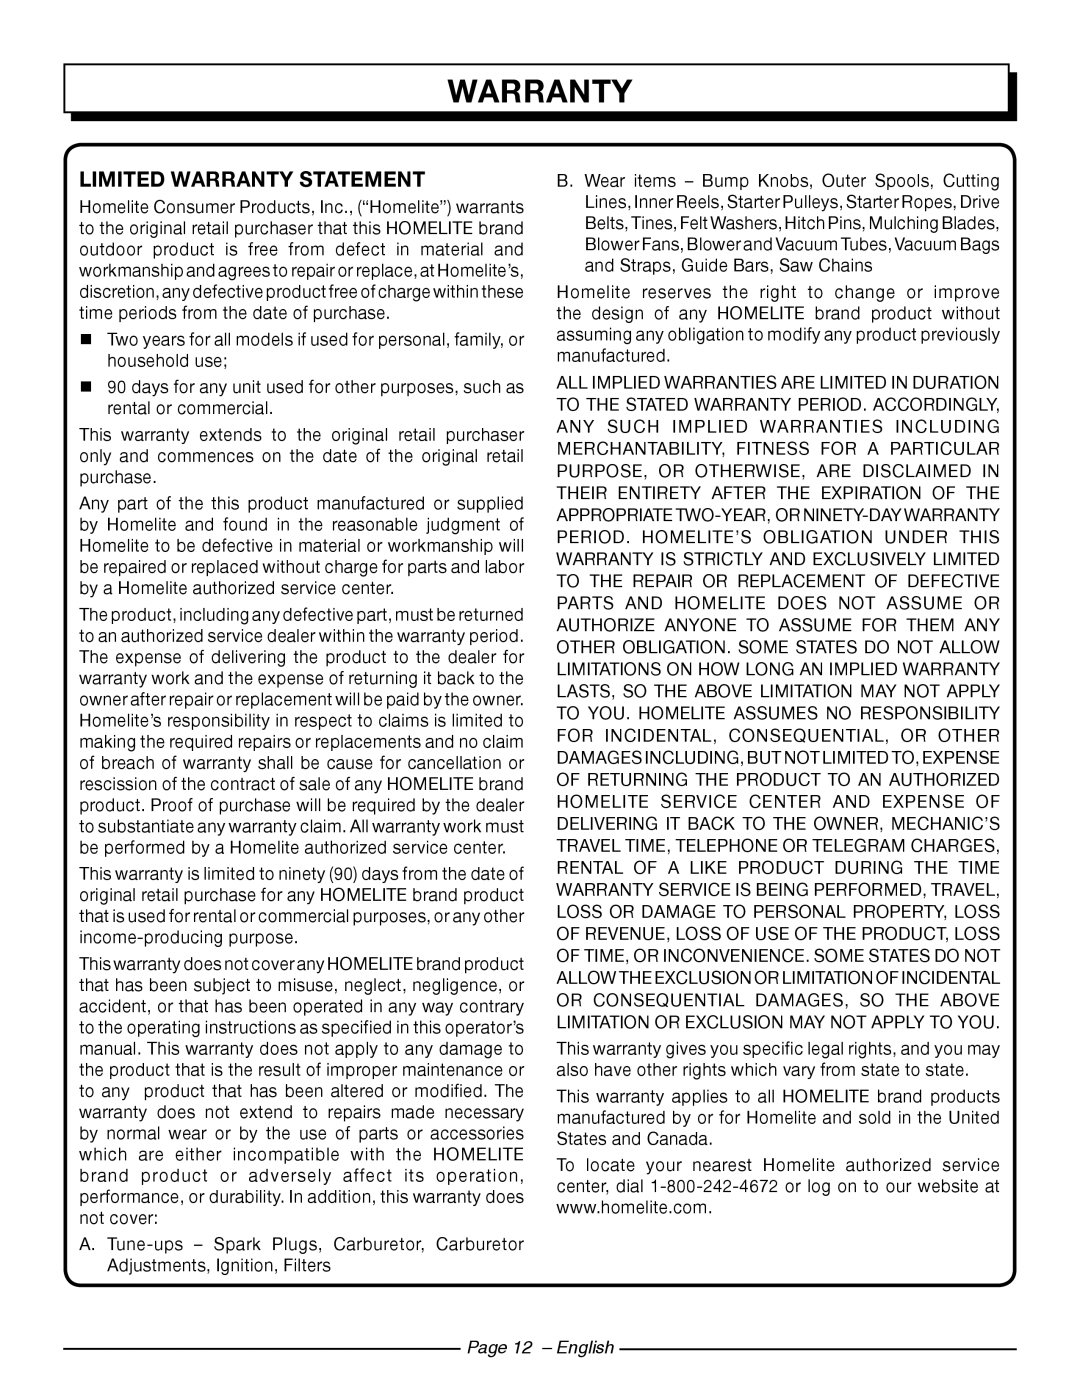 Homelite UT44121 manuel dutilisation Limited Warranty Statement, Page 12 - English 